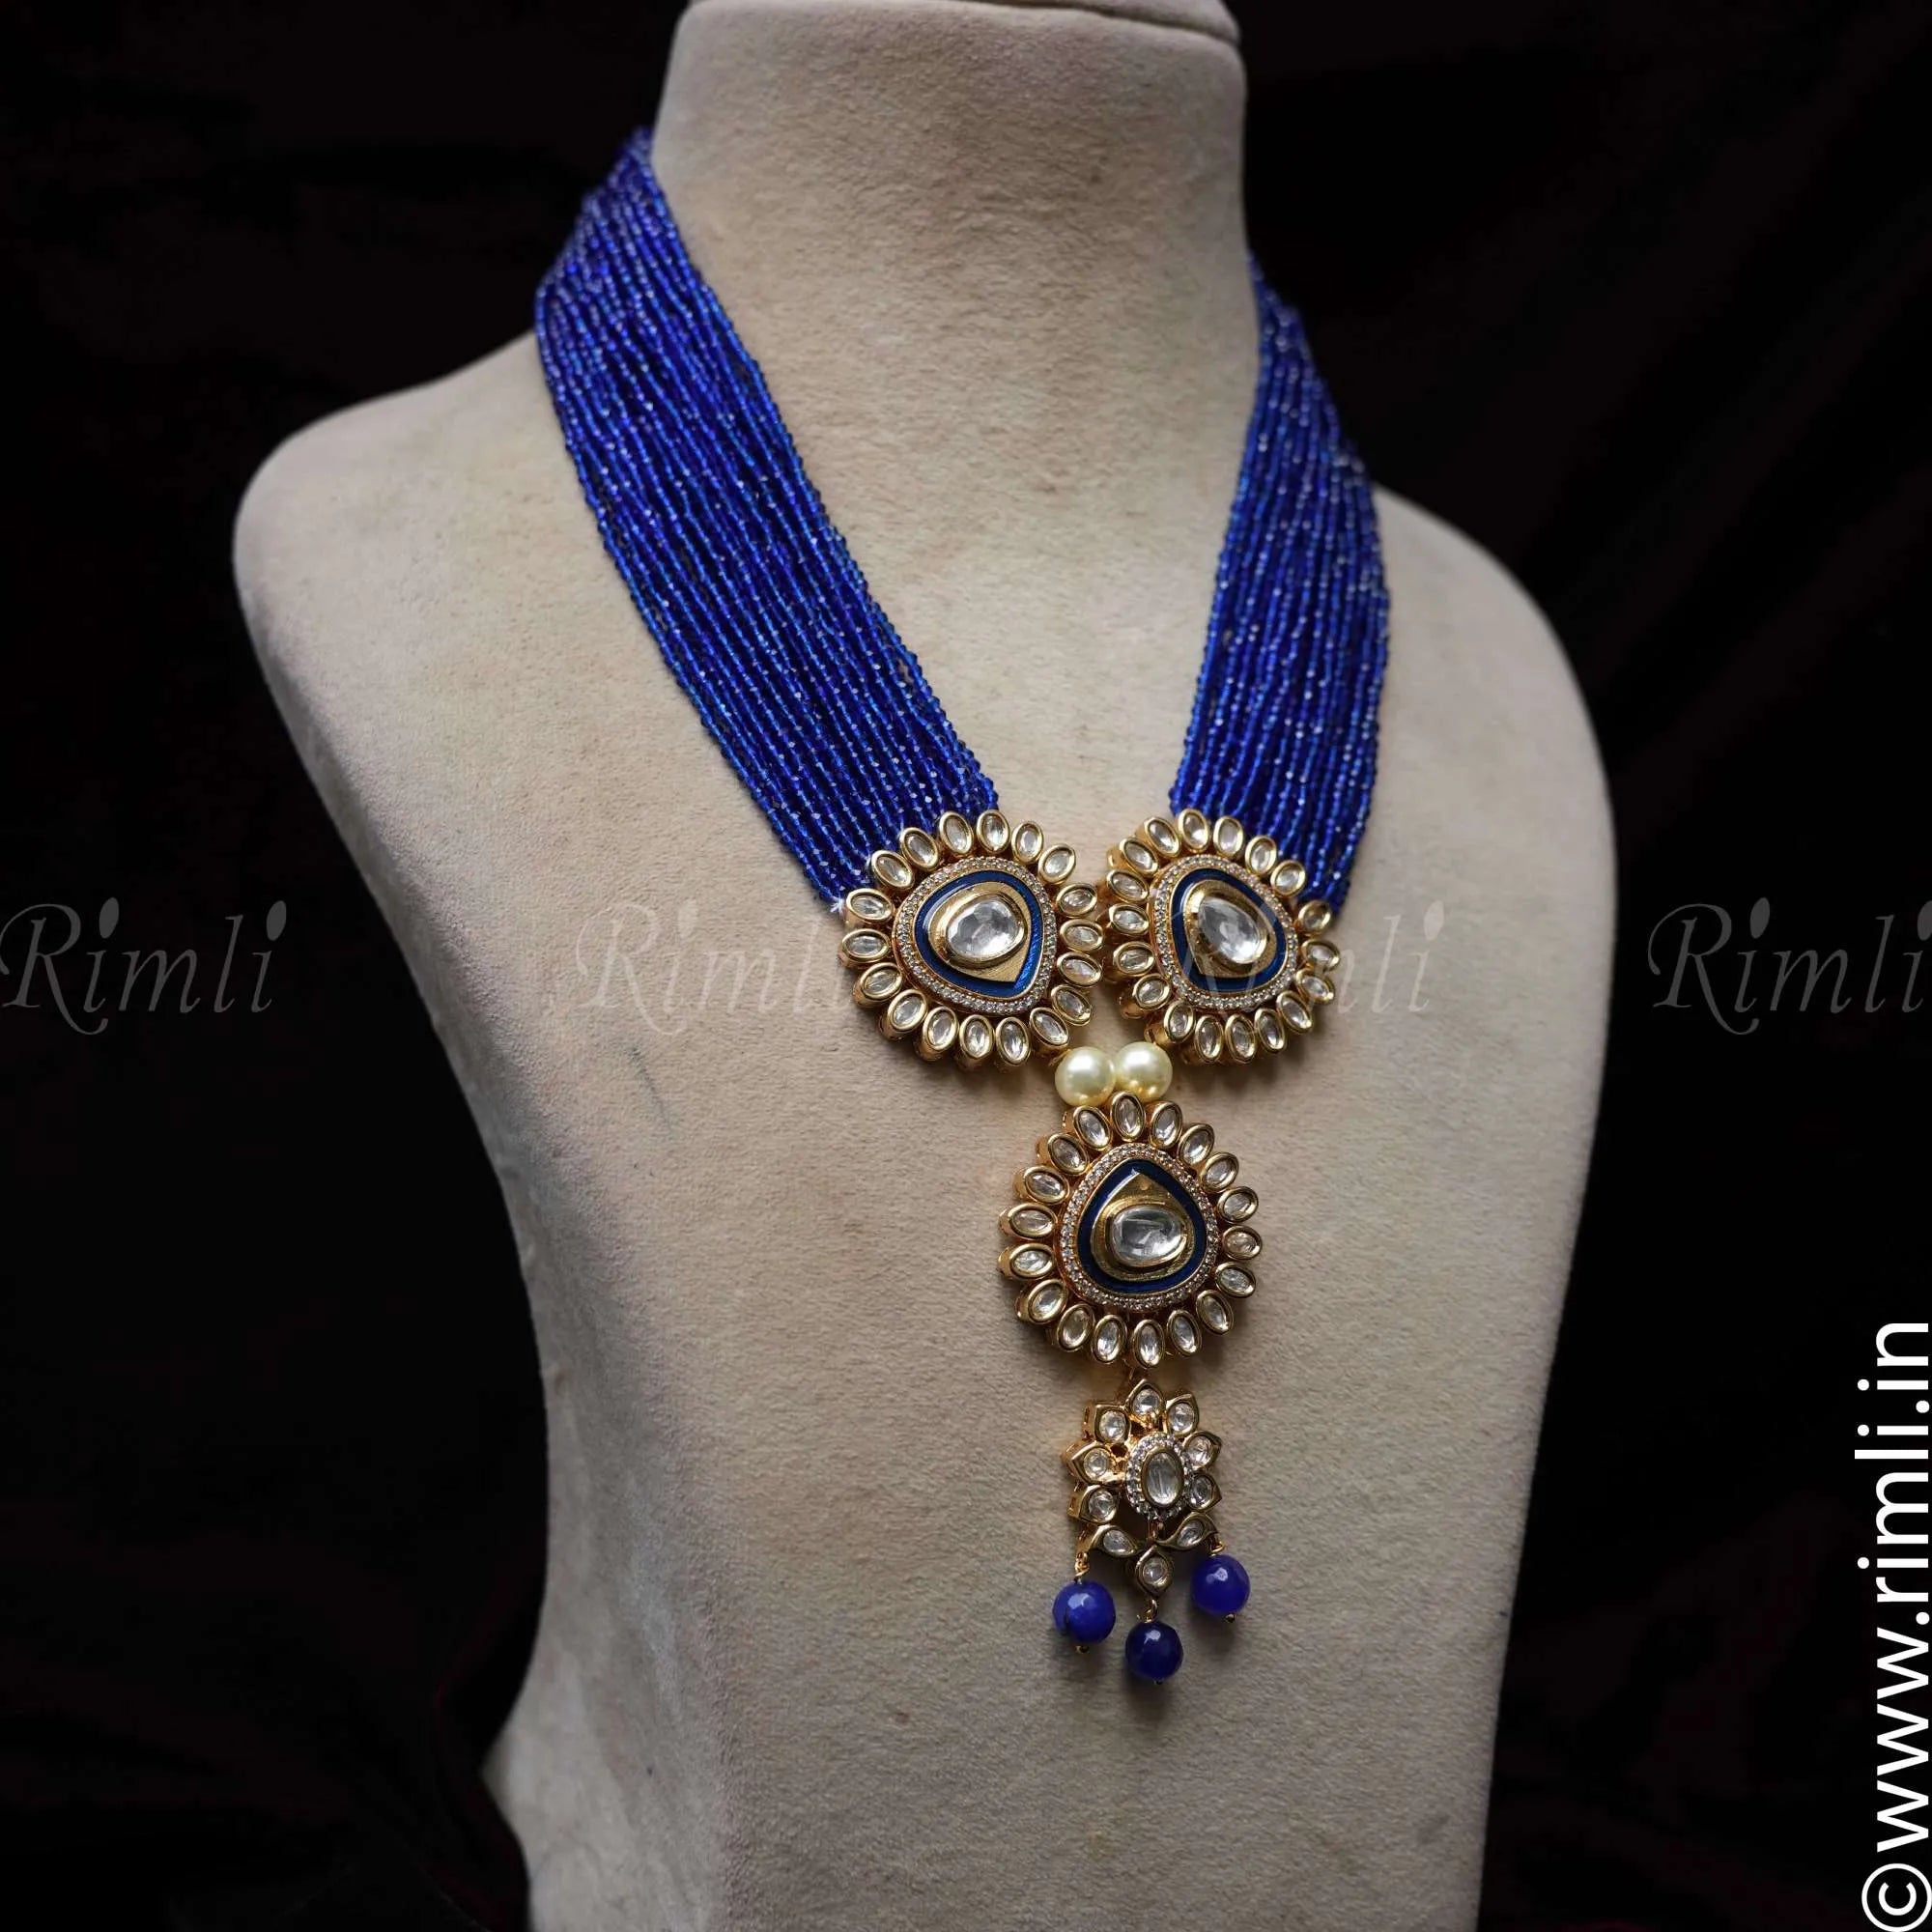 Ragini Beaded Necklace - Blue